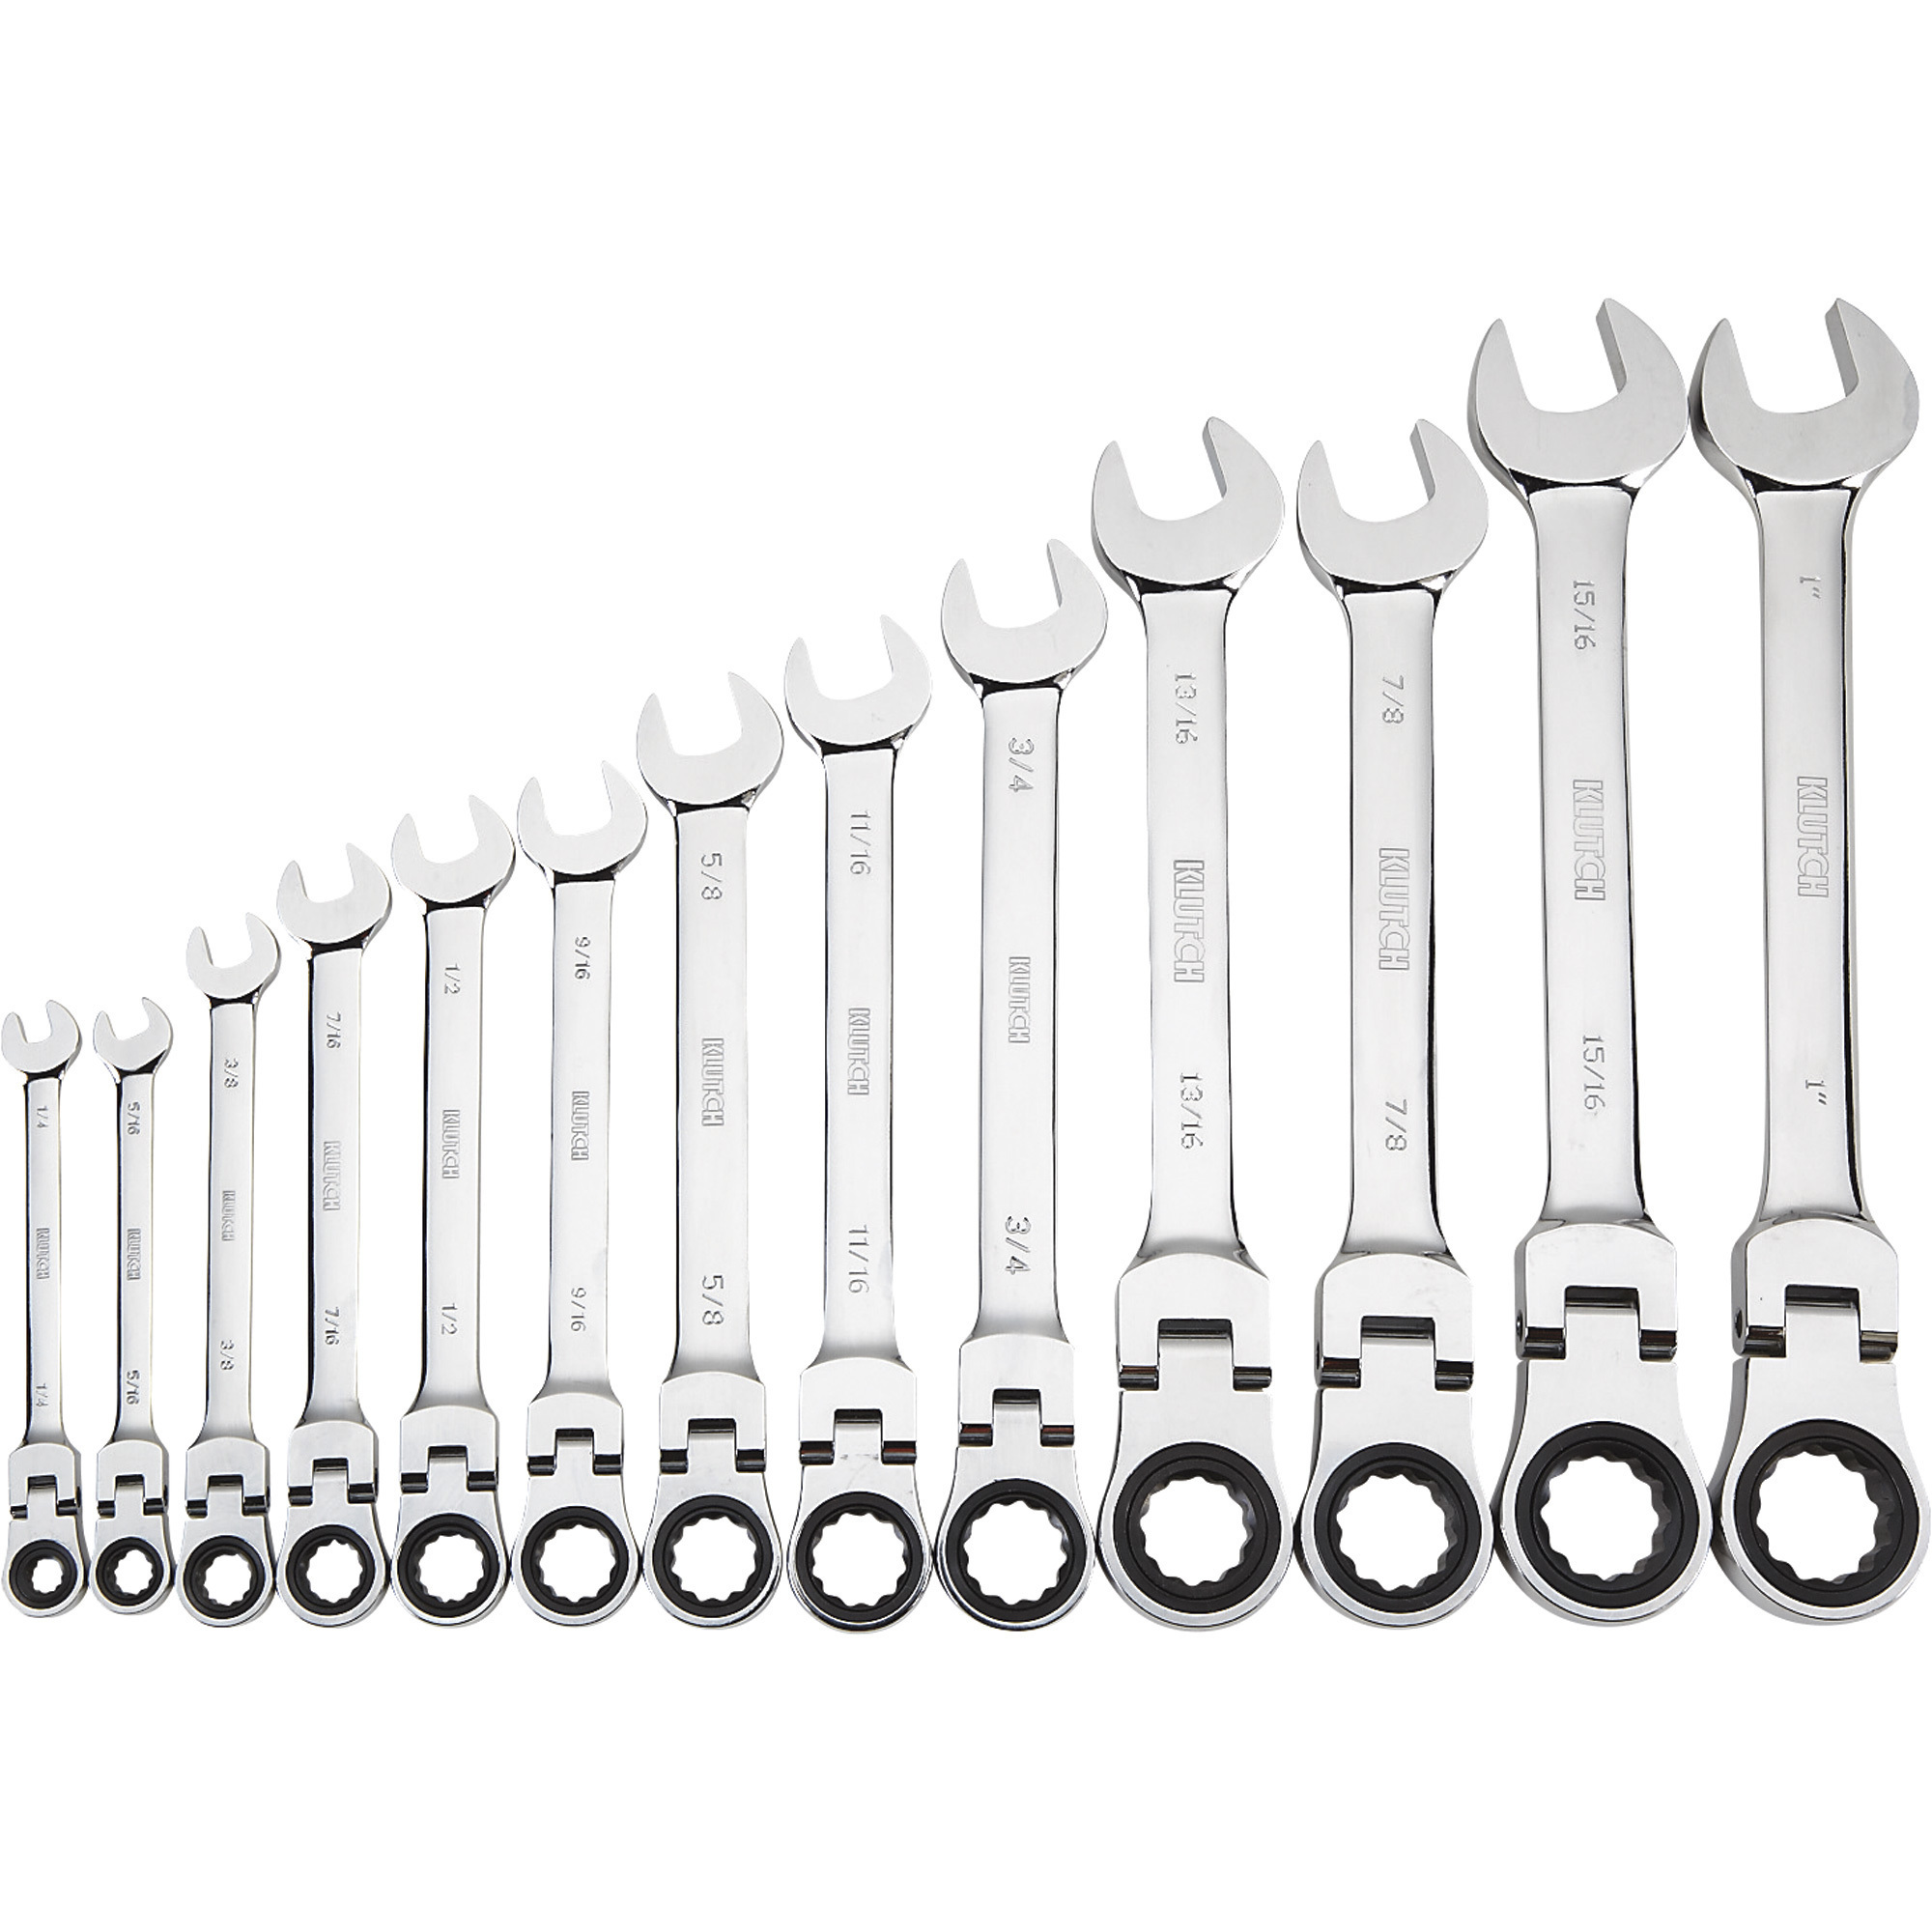 Klutch Flex Ratchet Wrench Set, 13-Piece, SAE, 1/4Inch-1Inch